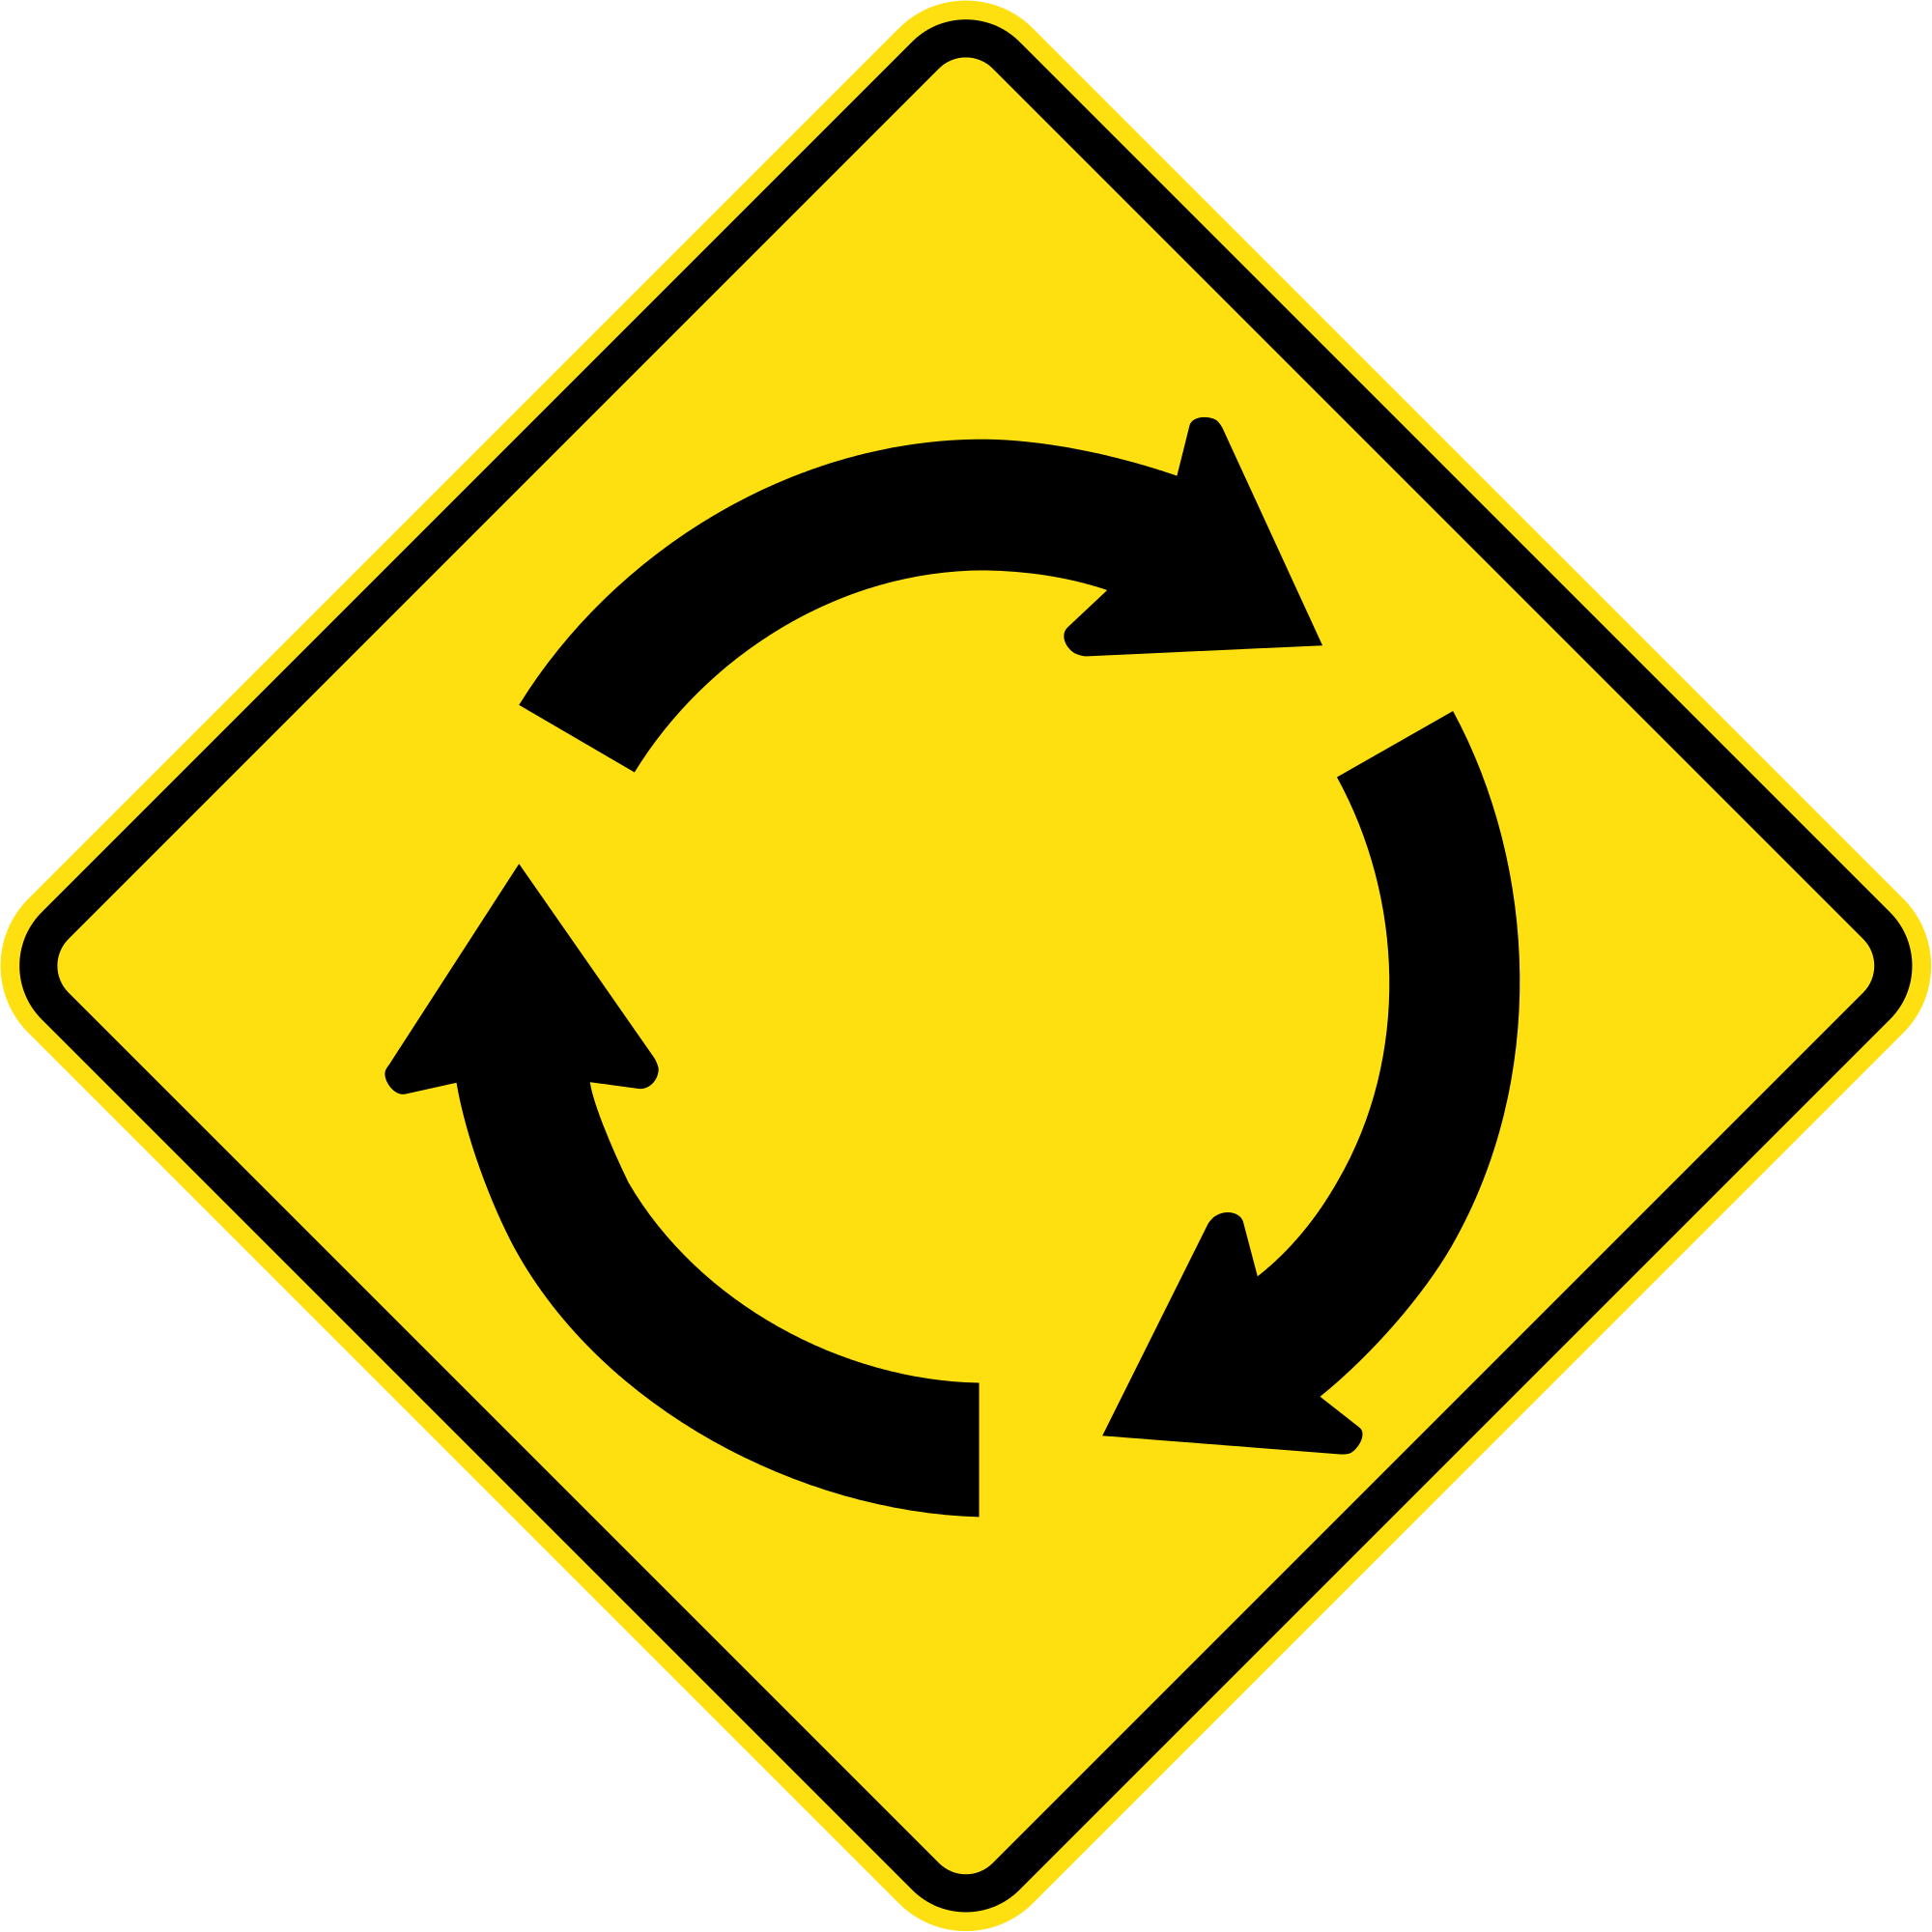 File:Australia road sign W2-7.svg - Wikimedia Commons